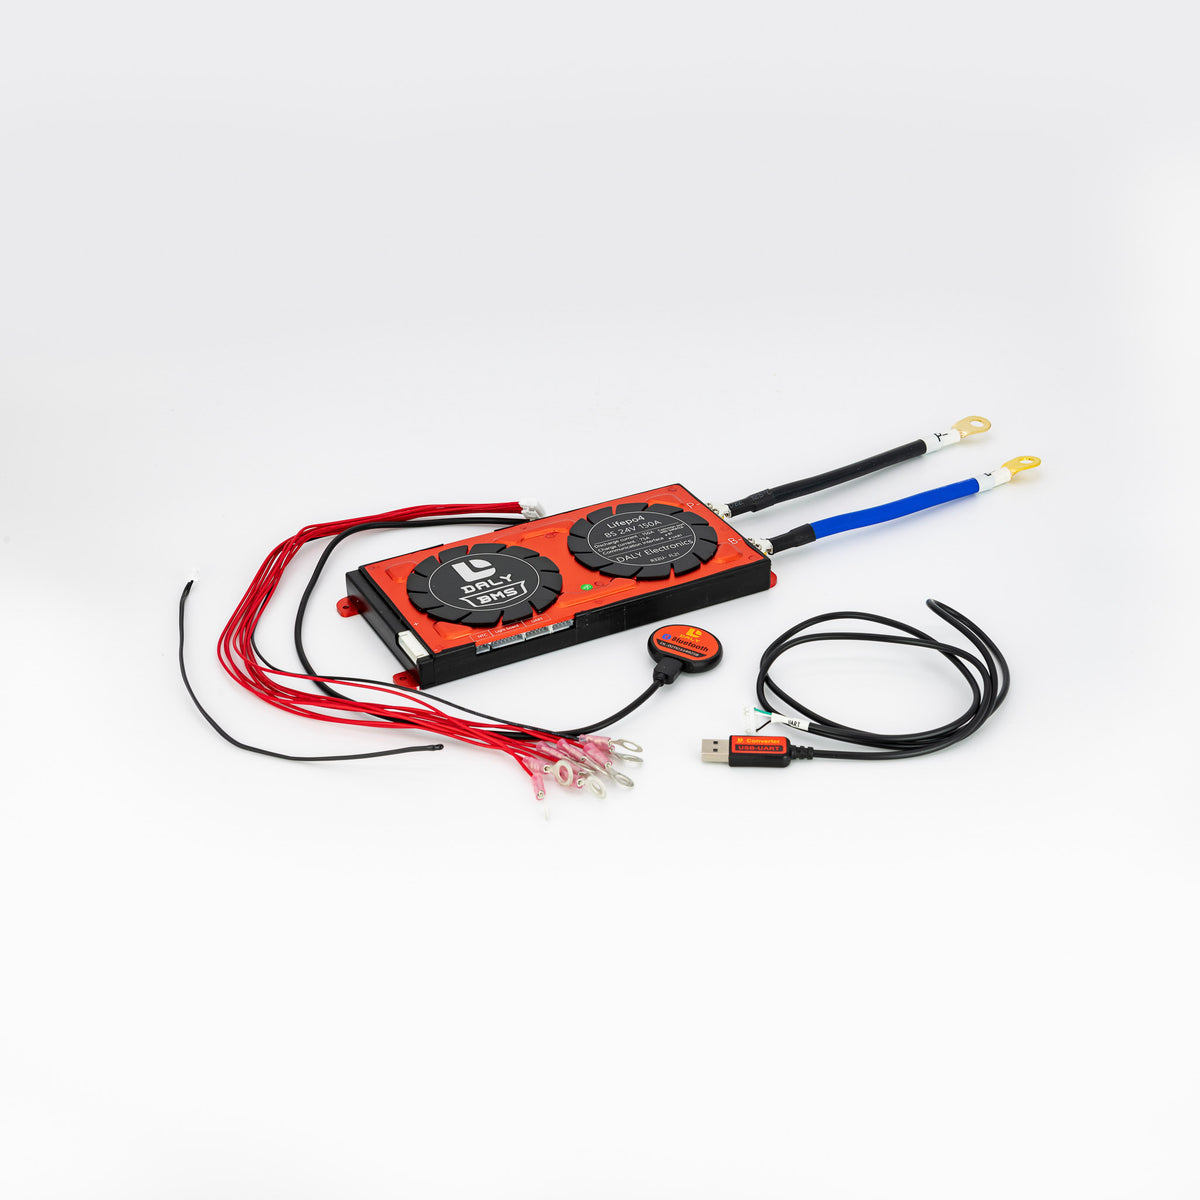 LiFePO4 Akku 24V 100Ah mit BMS (Batterie Management System